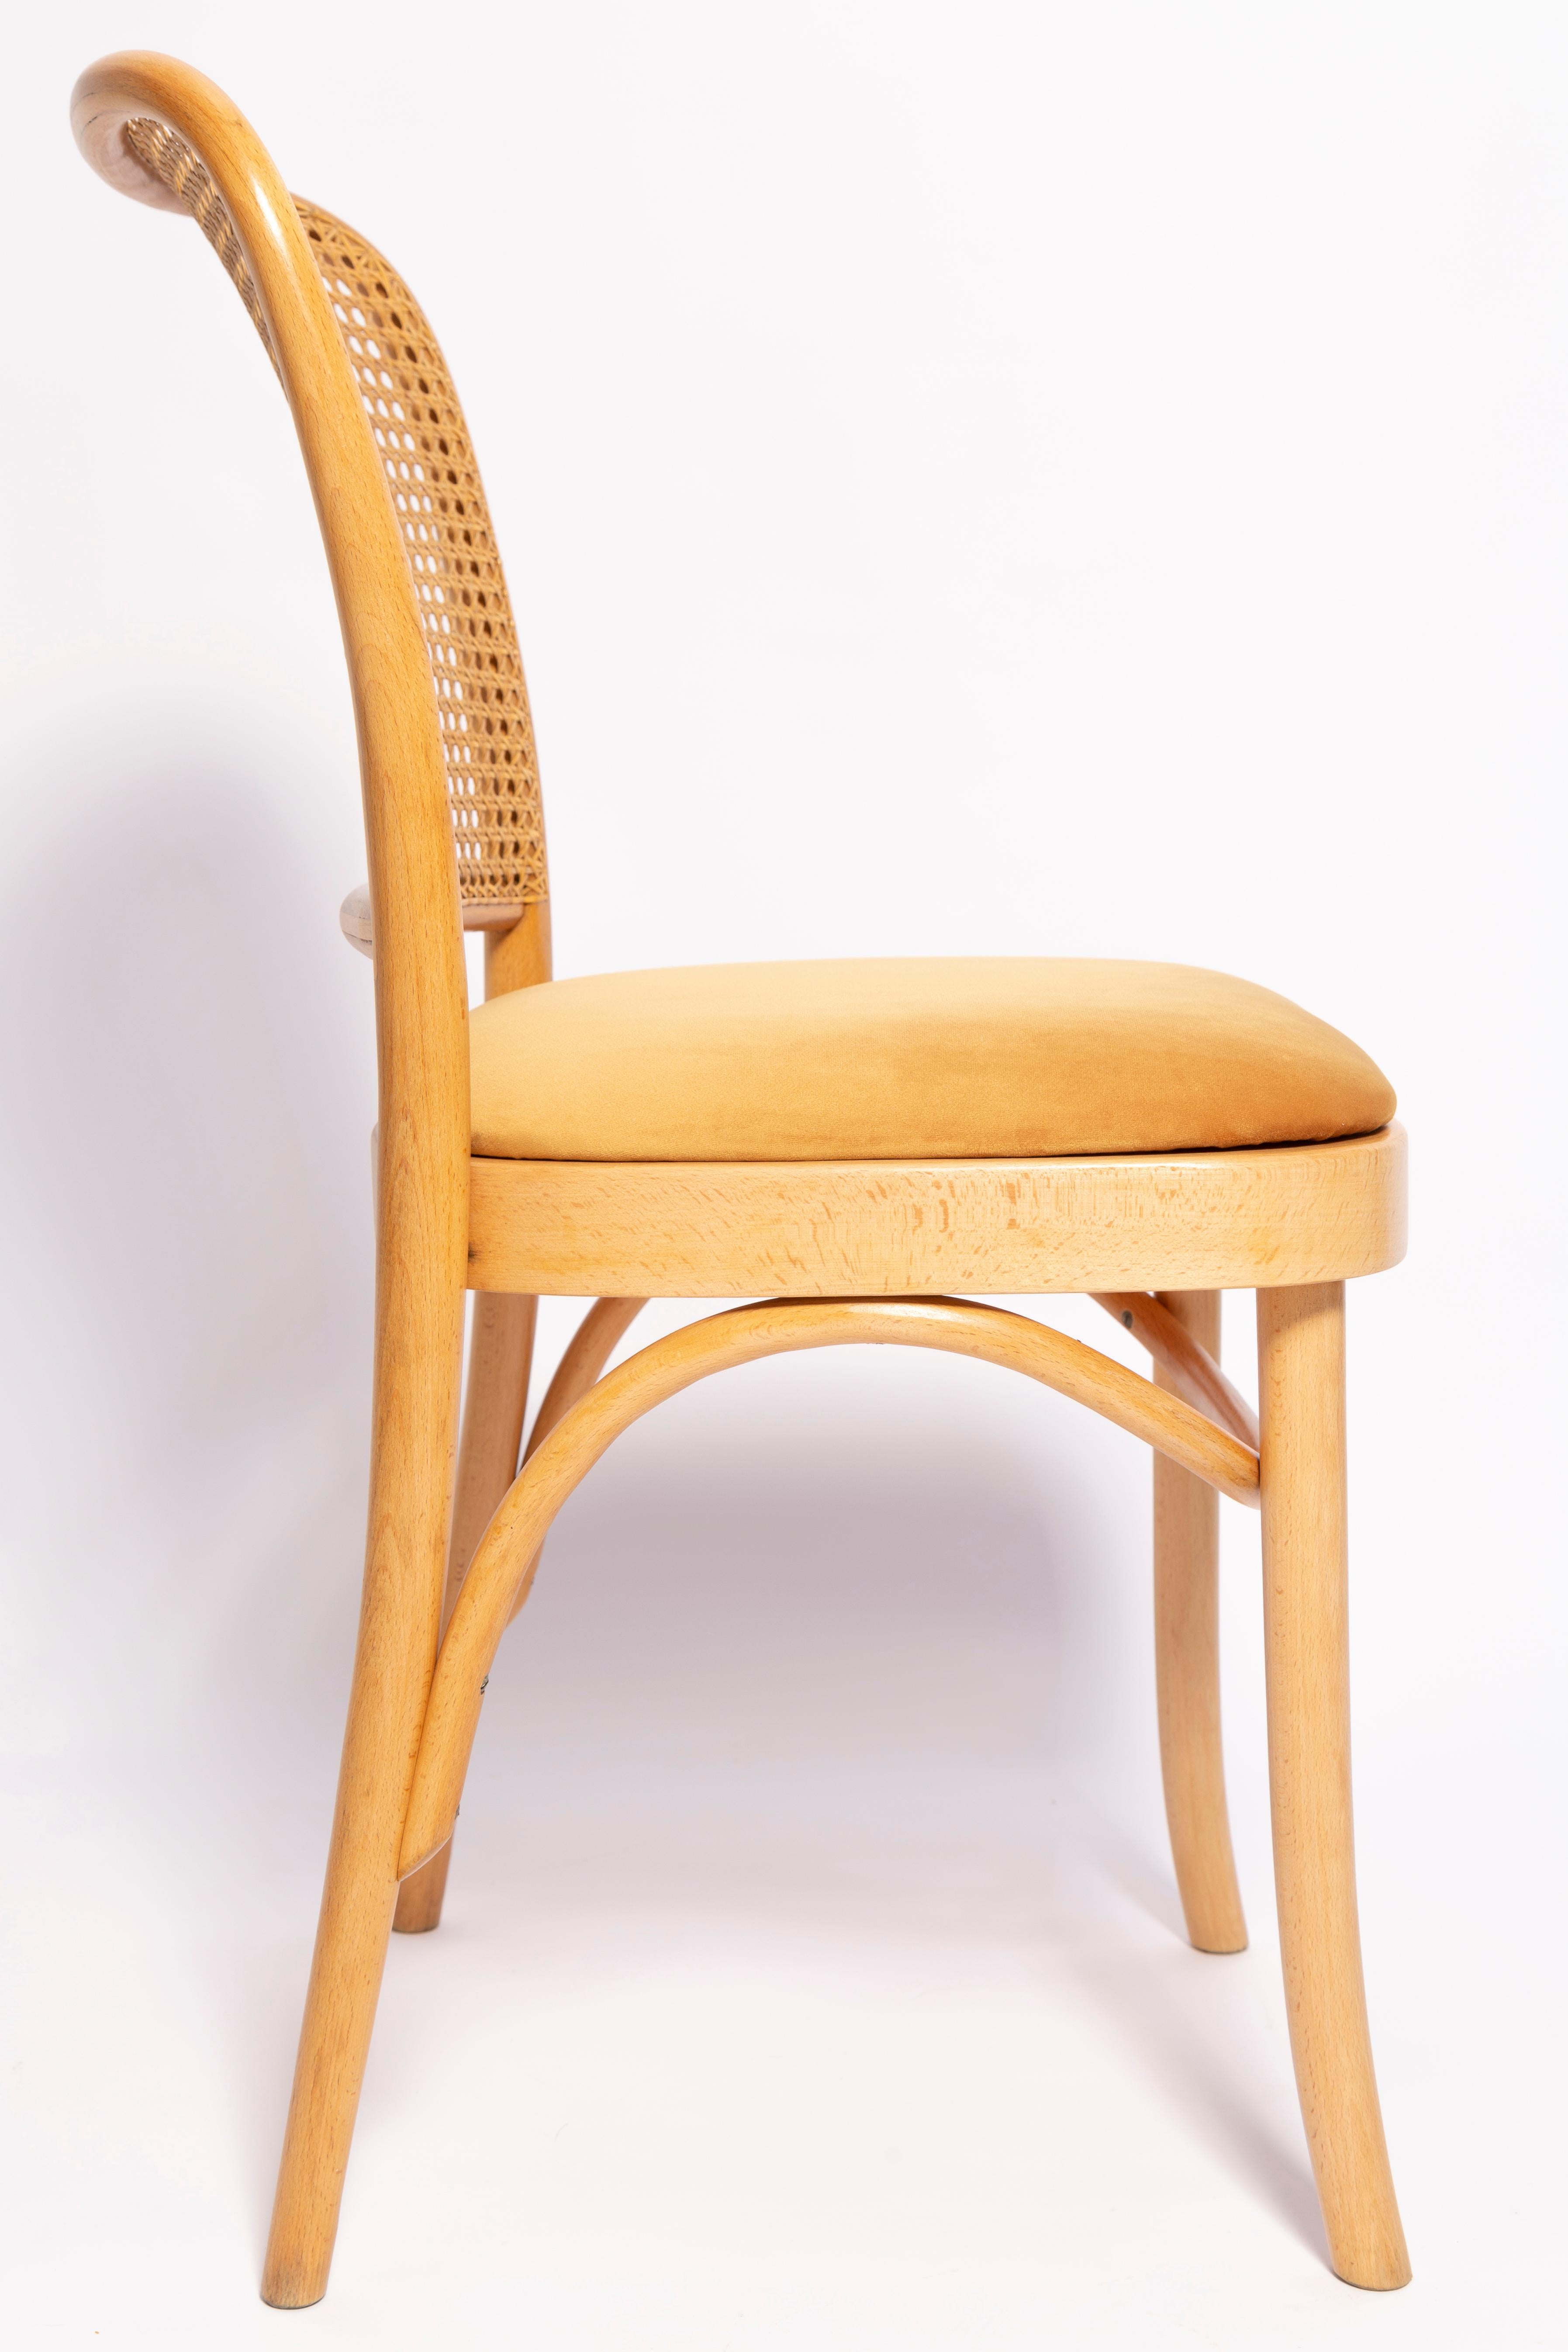 20th Century Mid-Century Yellow Velvet Thonet Wood Rattan Chair, Europe, 1960s For Sale